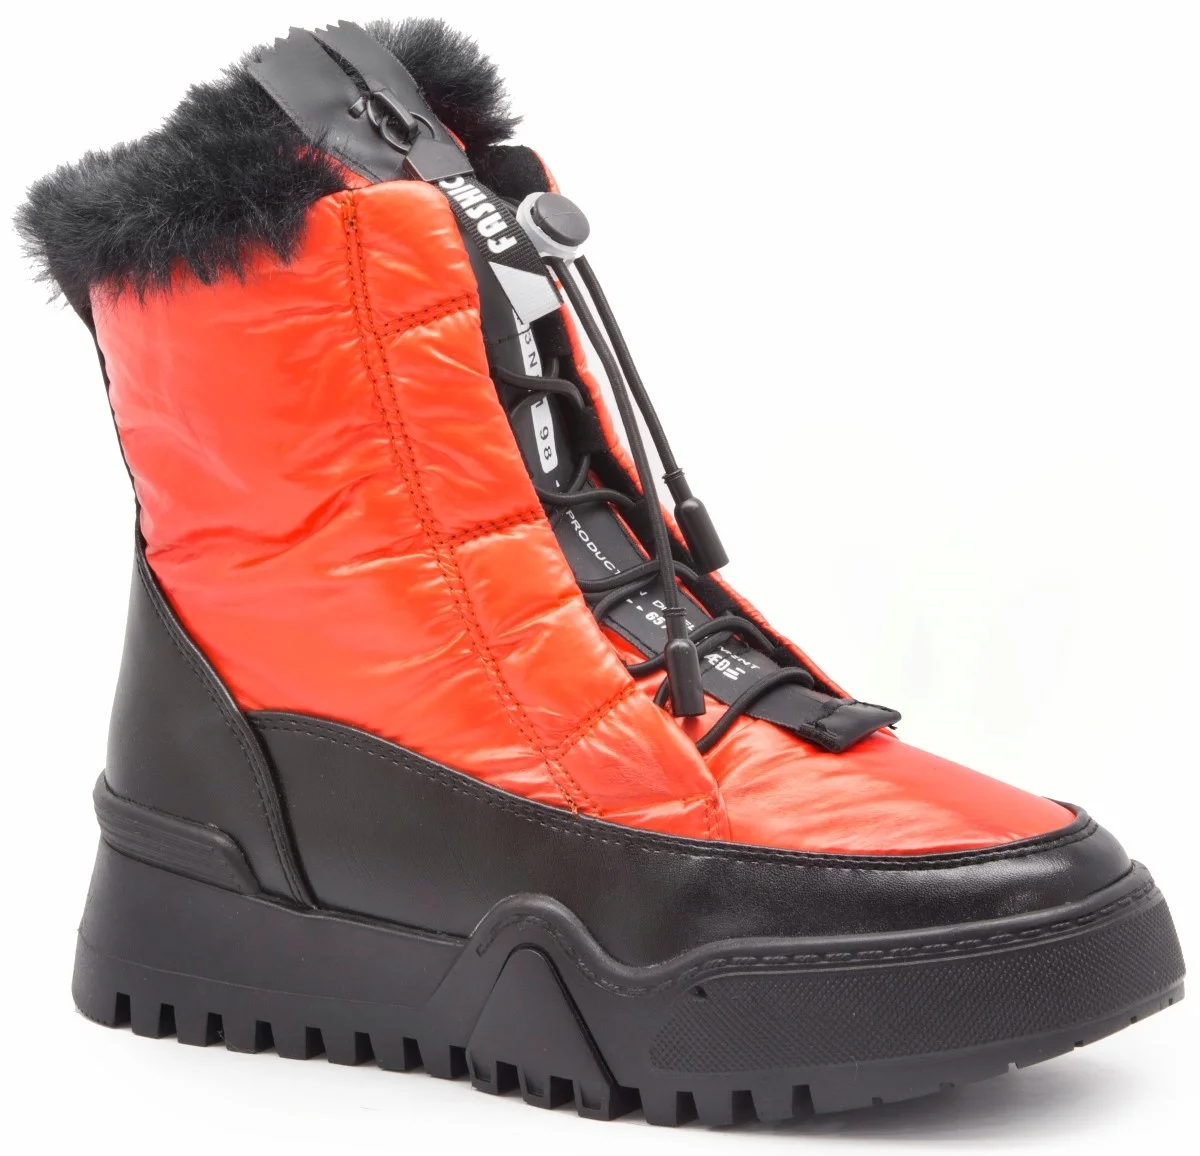 Gedikpasalı Guja 148 Orange 2022 Winter Season Women Boots Casual Sneakers  Daily Use Elevator Snow Ski Outdoor Street Style - AliExpress